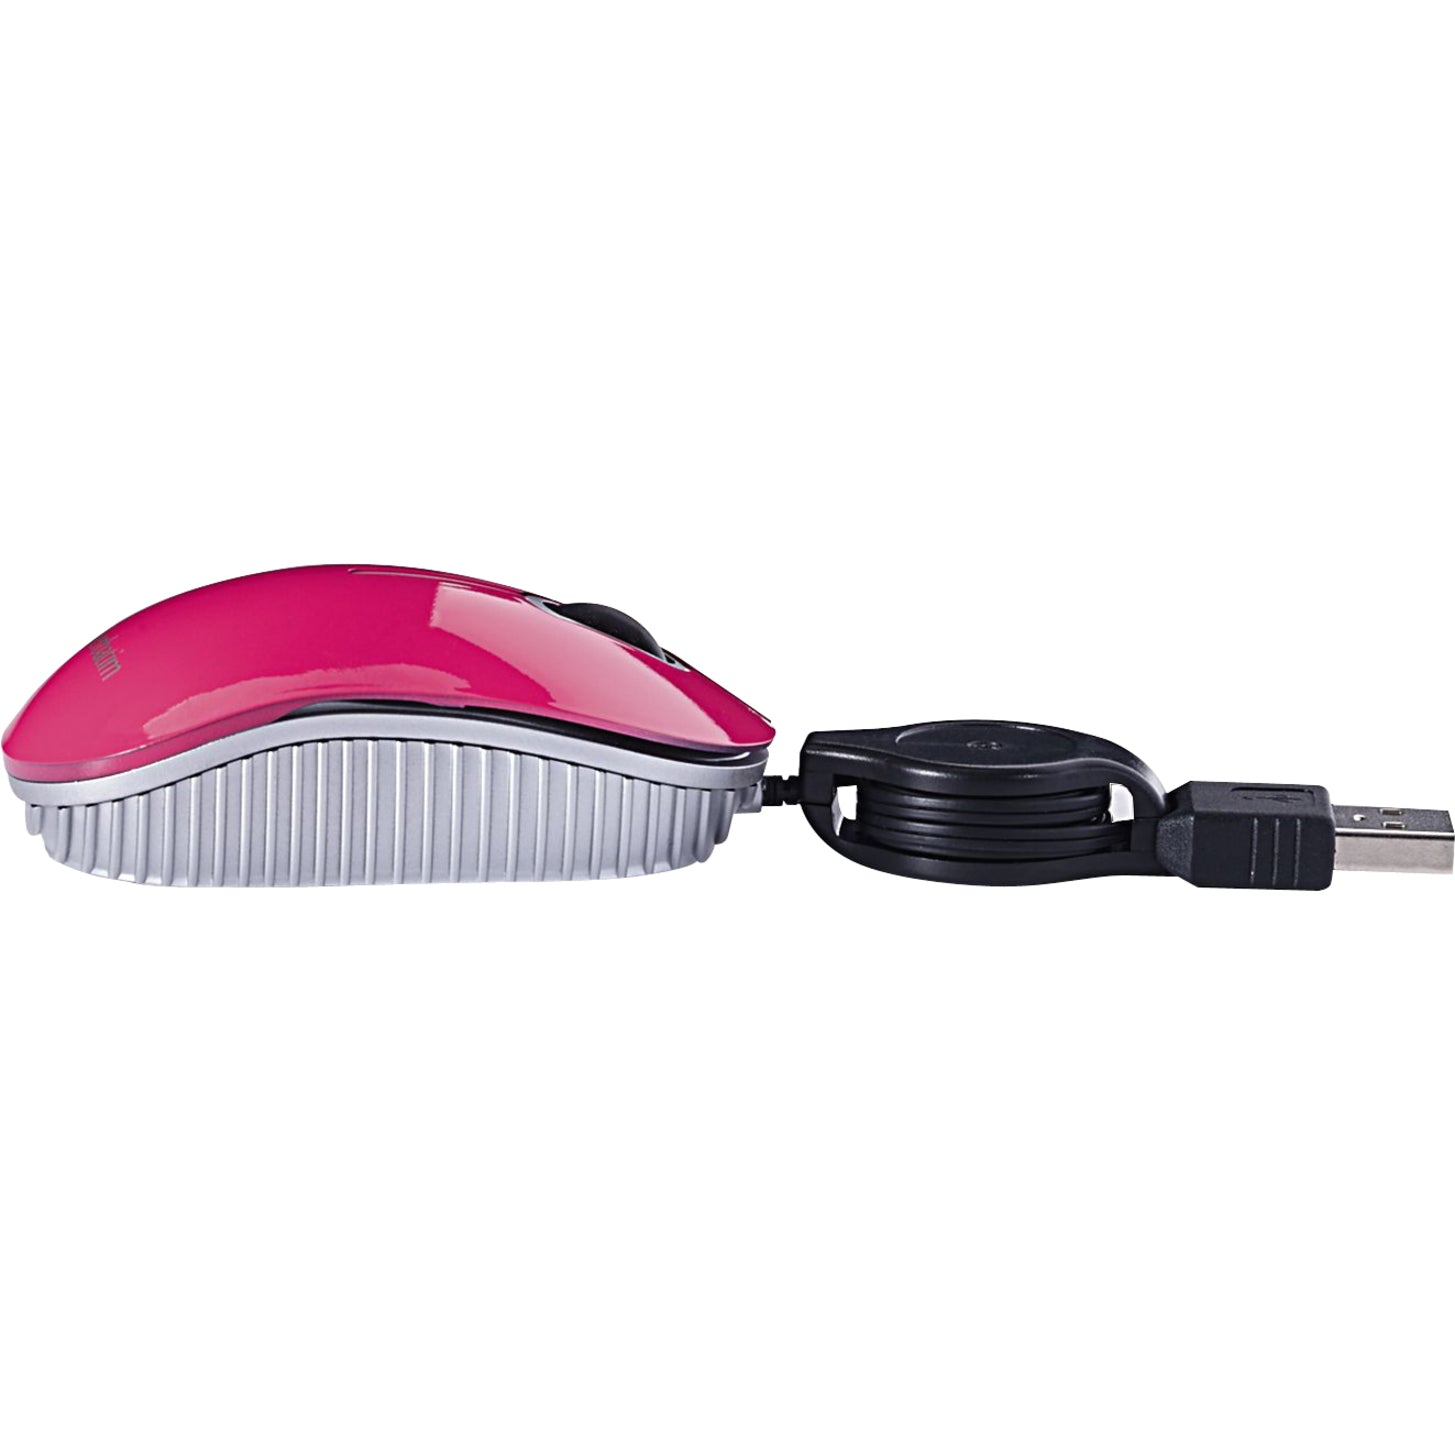 Verbatim 98618 Mini Travel Optical Mouse, Pink, USB 2.0, 1 Year Warranty